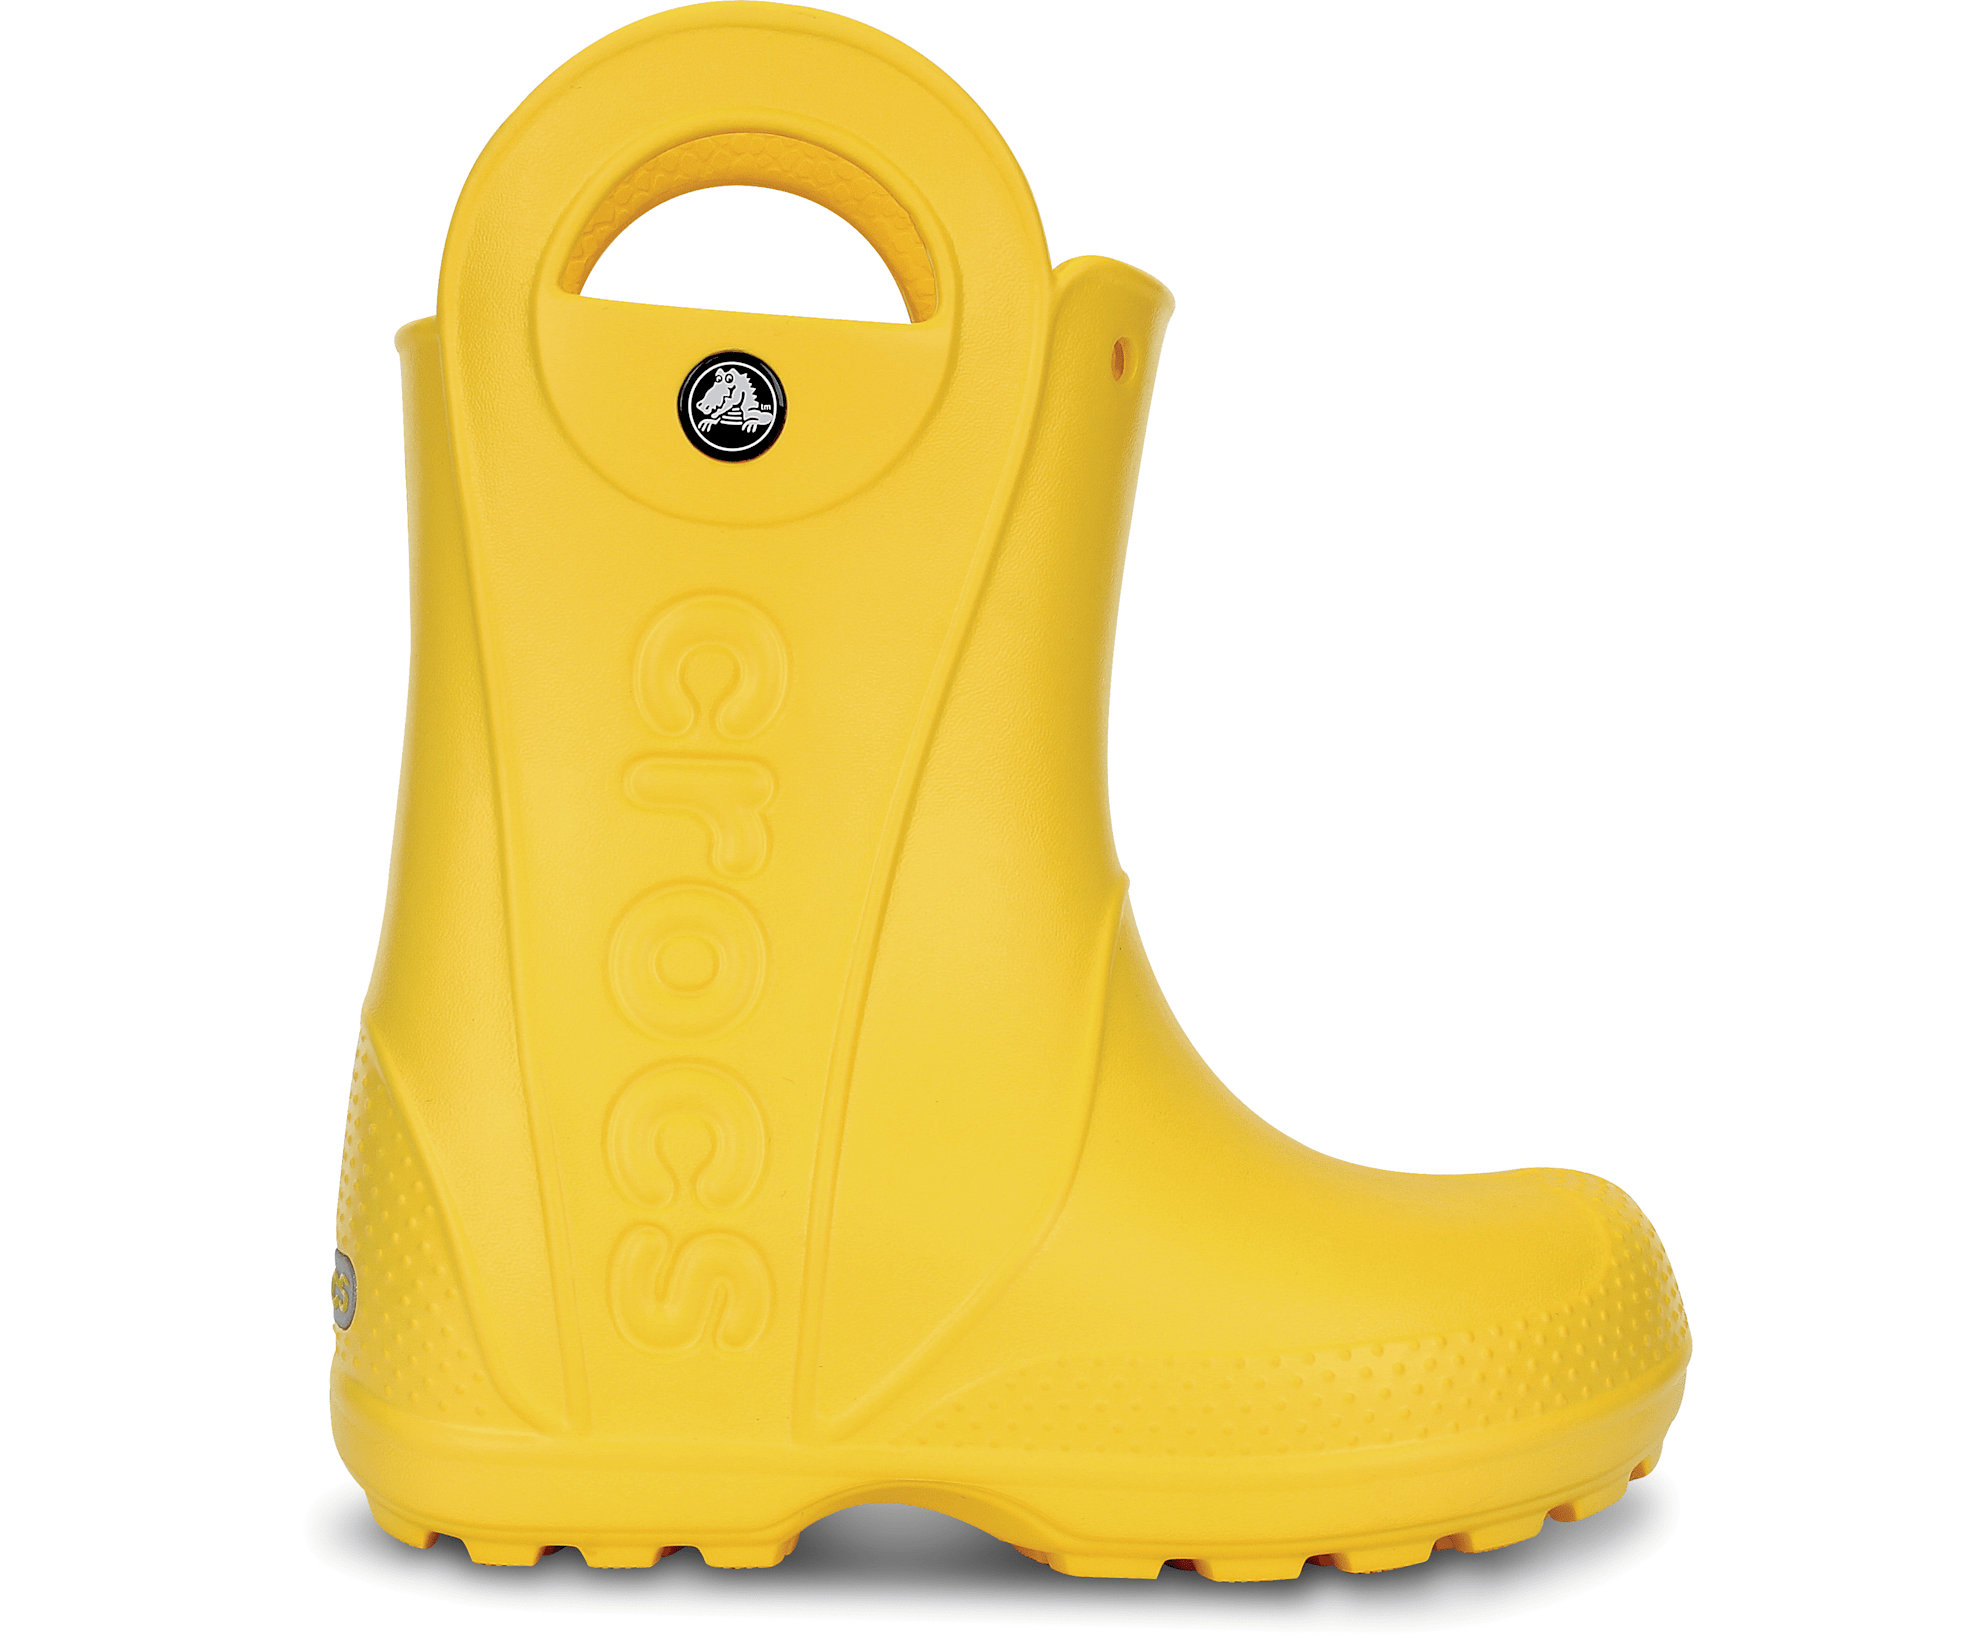 Crocs Kids Handle It Rain Boot - Yellow